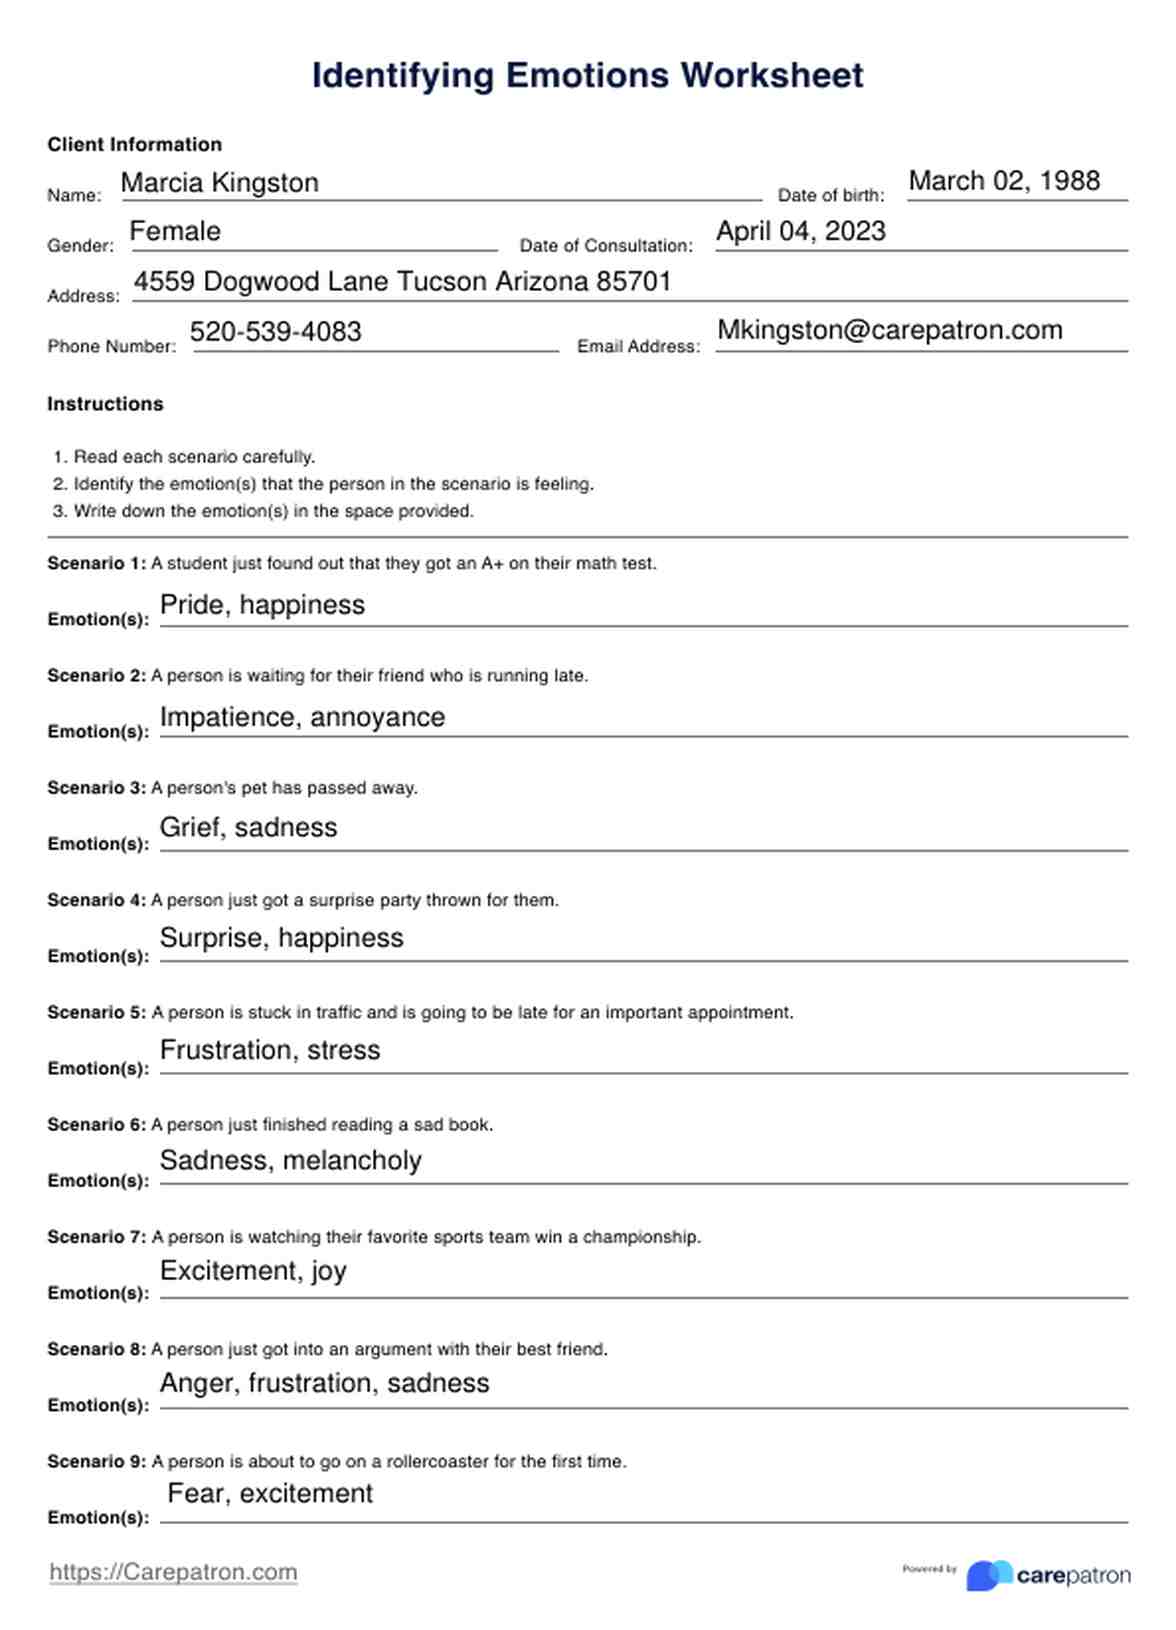 Identifying Emotions Worksheet PDF Example